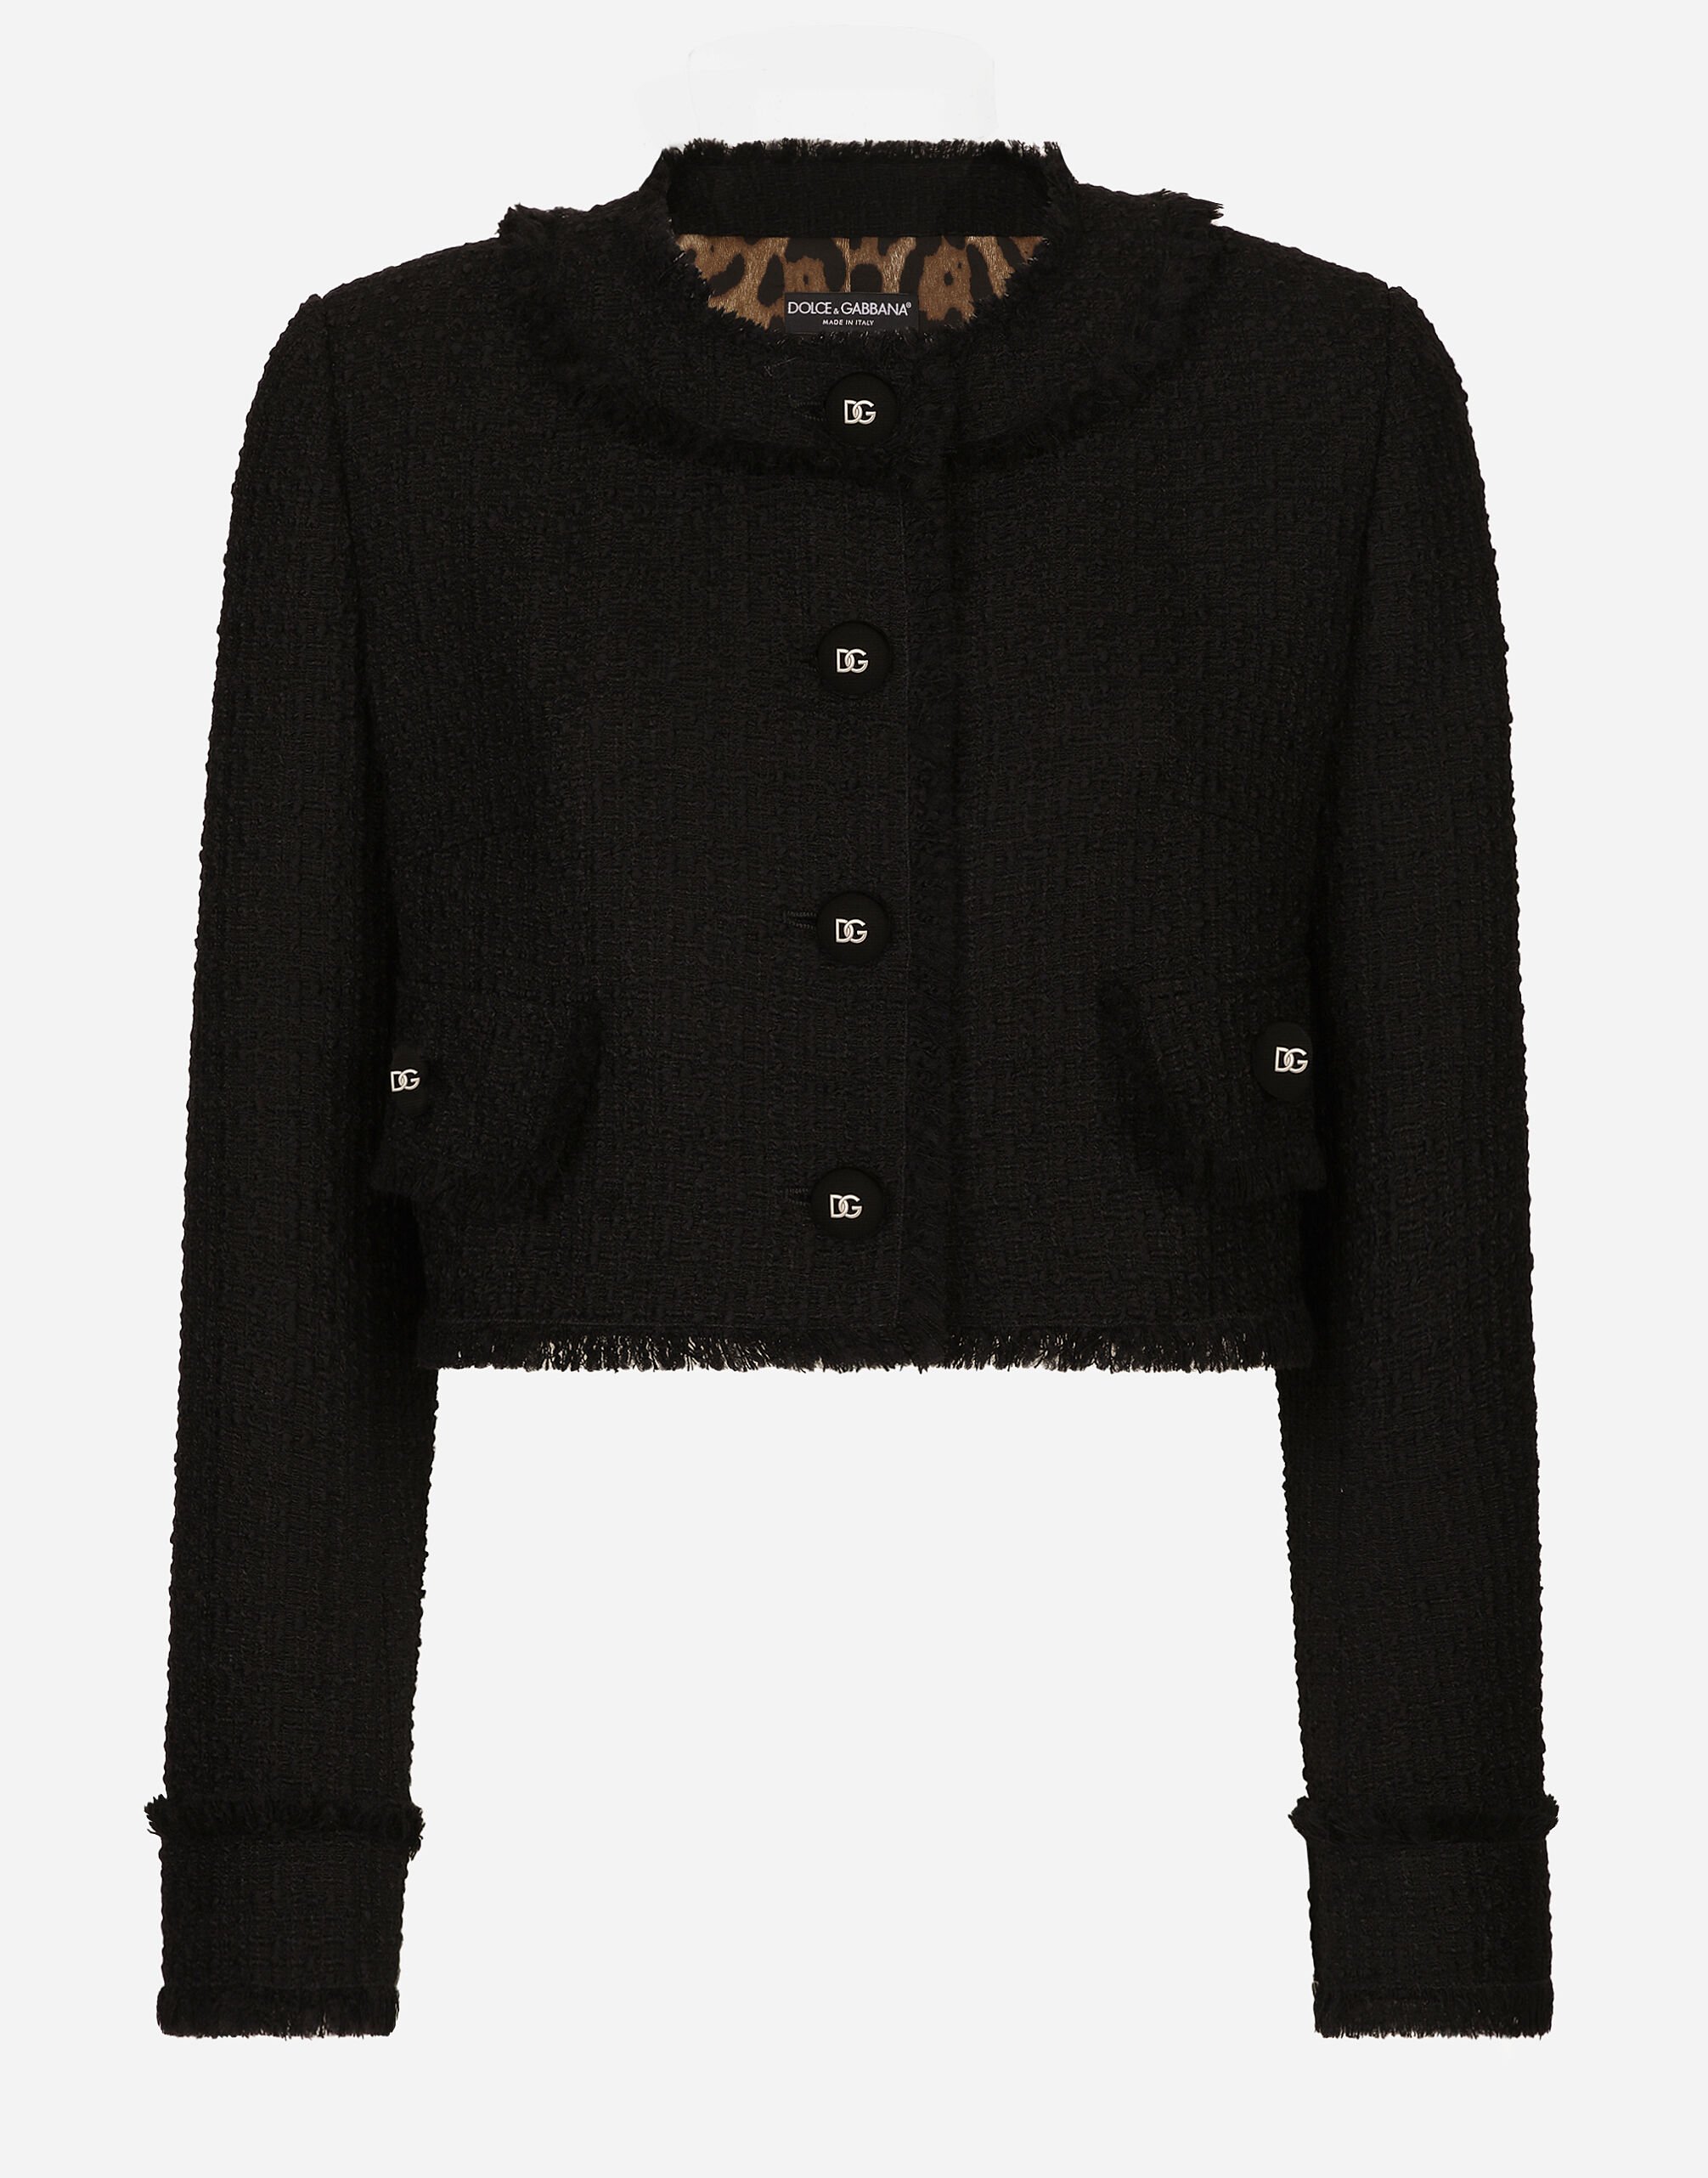 Dolce & Gabbana Giacca corta in tweed rachel Stampa F29UDTIS1P4